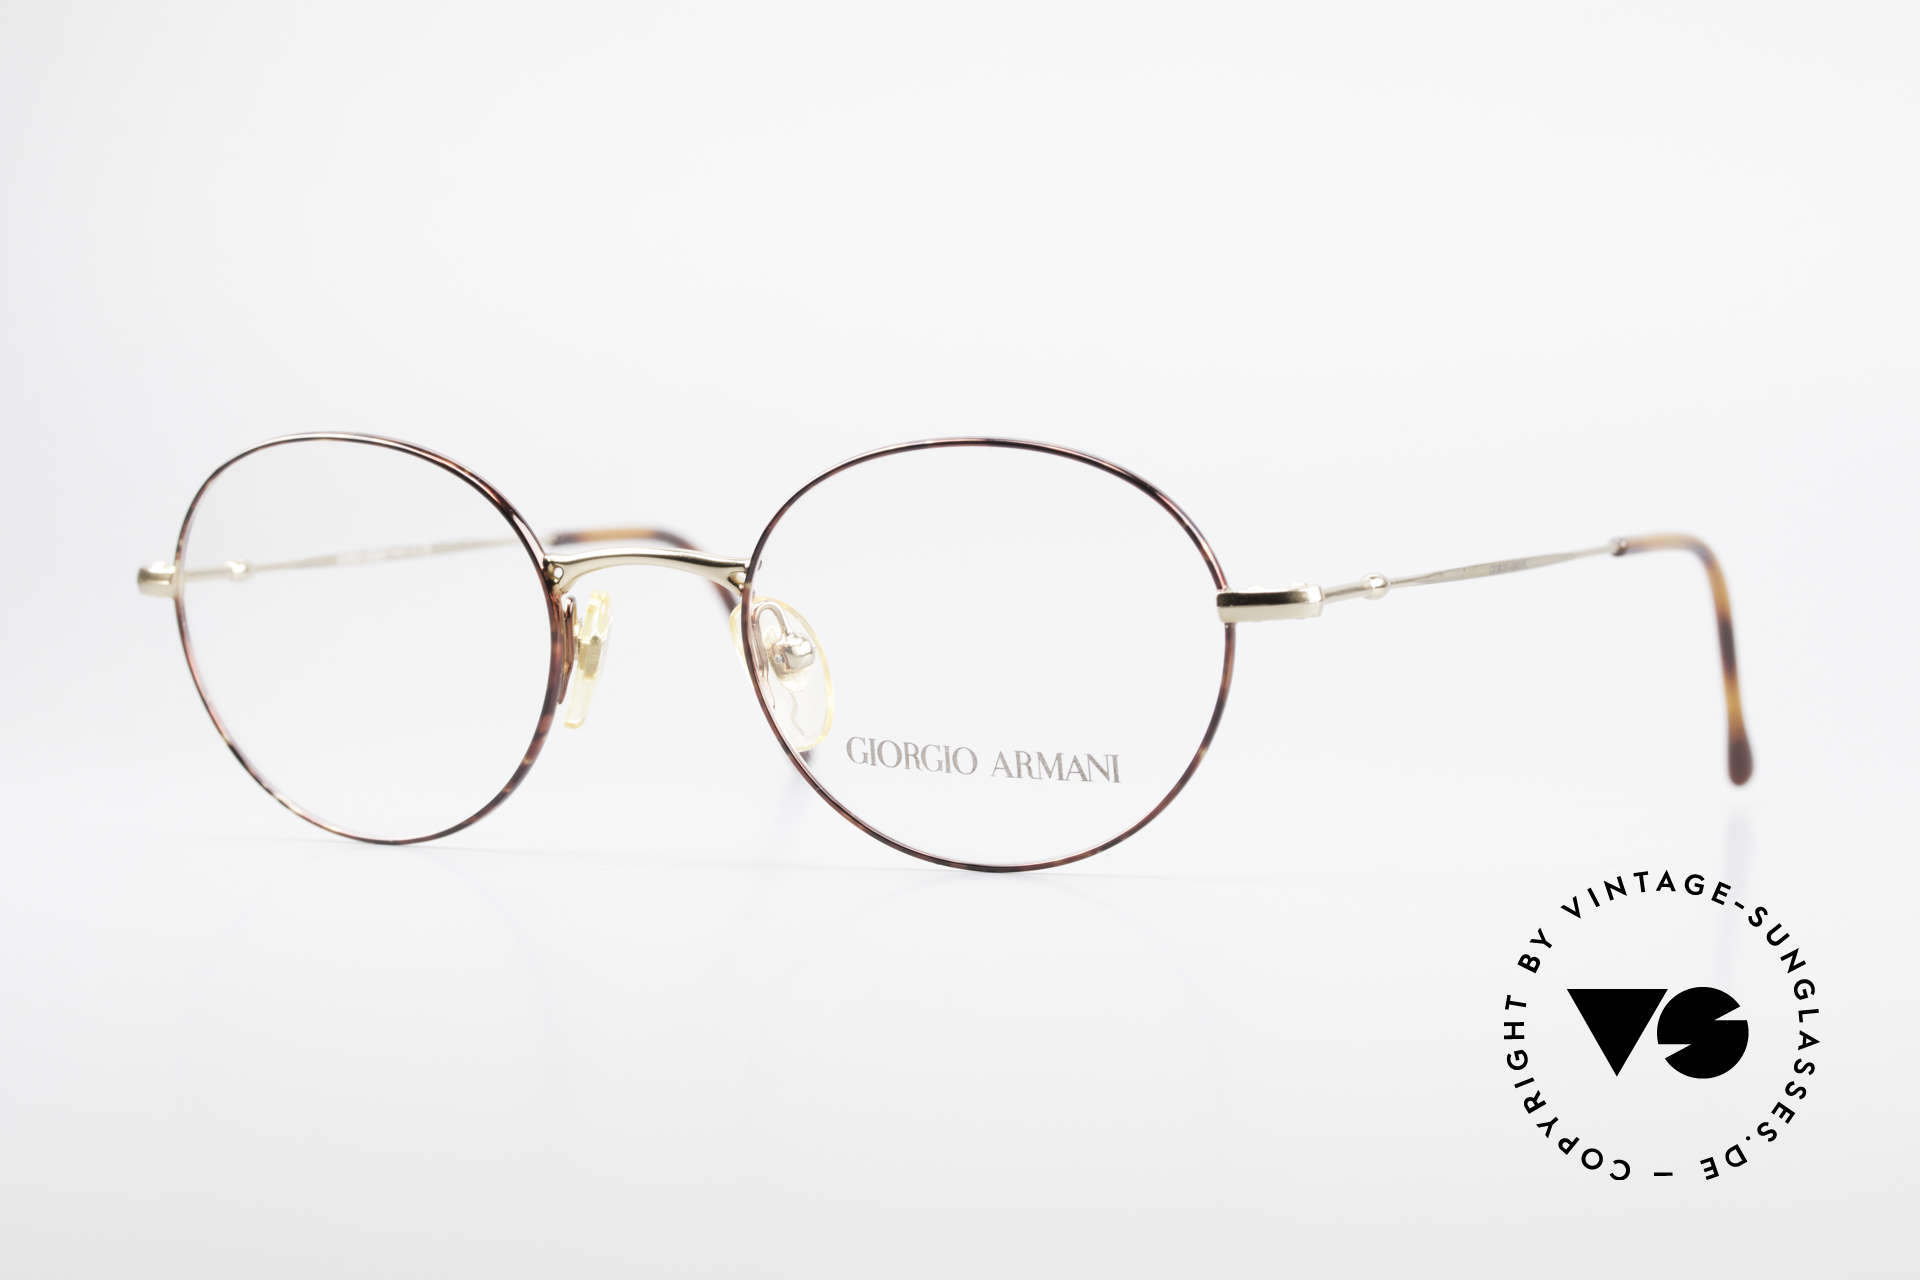 giorgio armani eyeglasses frames